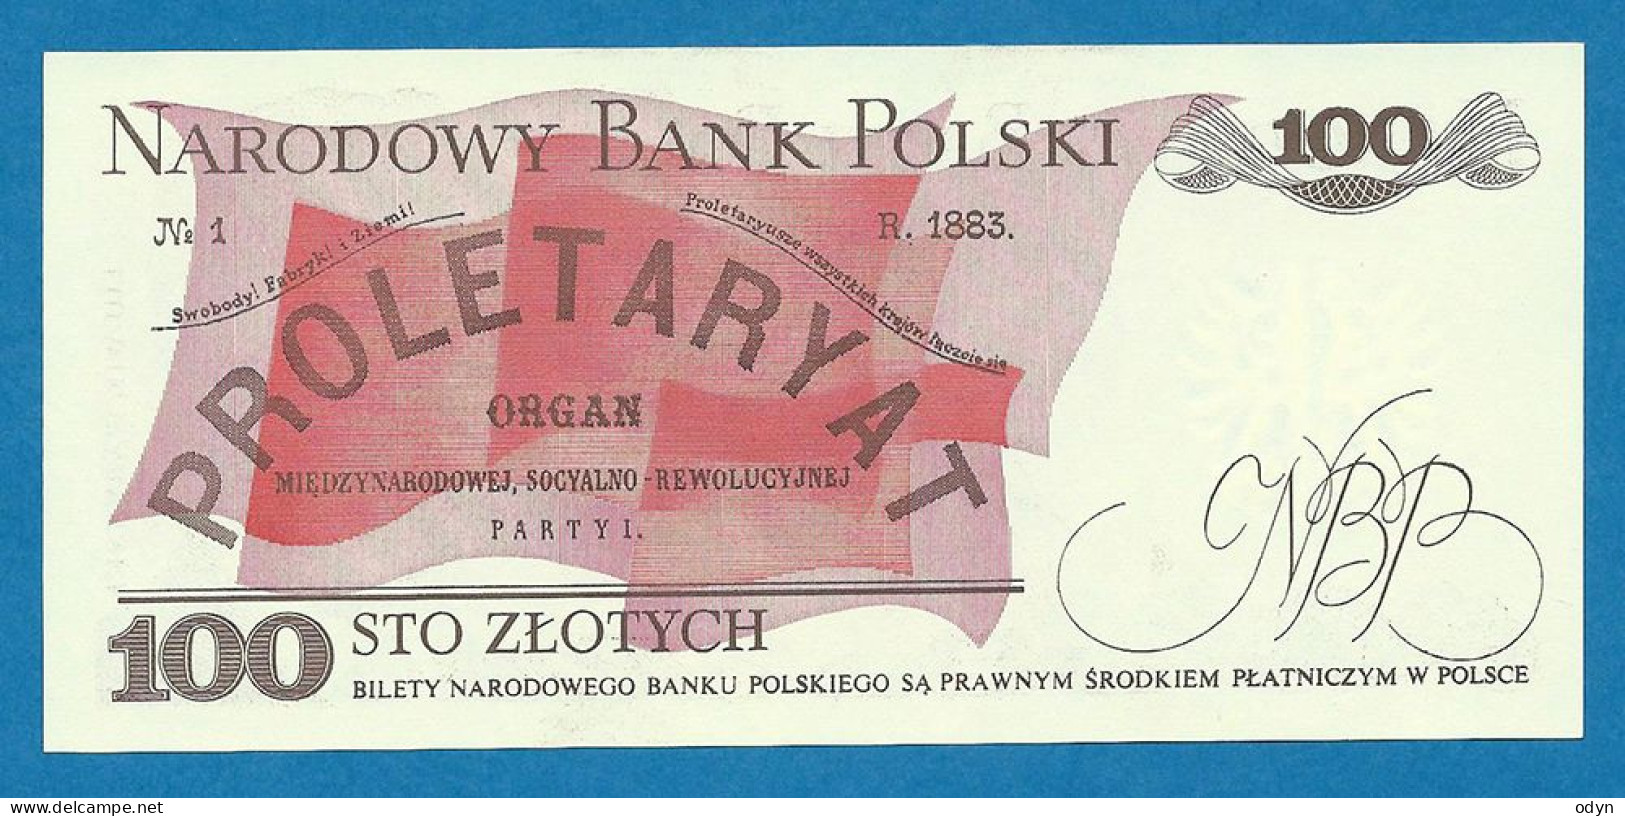 Poland, 1986, 1988; lot of 24 banknotes 100 zlotych, UNC, -UNC, AU - see description